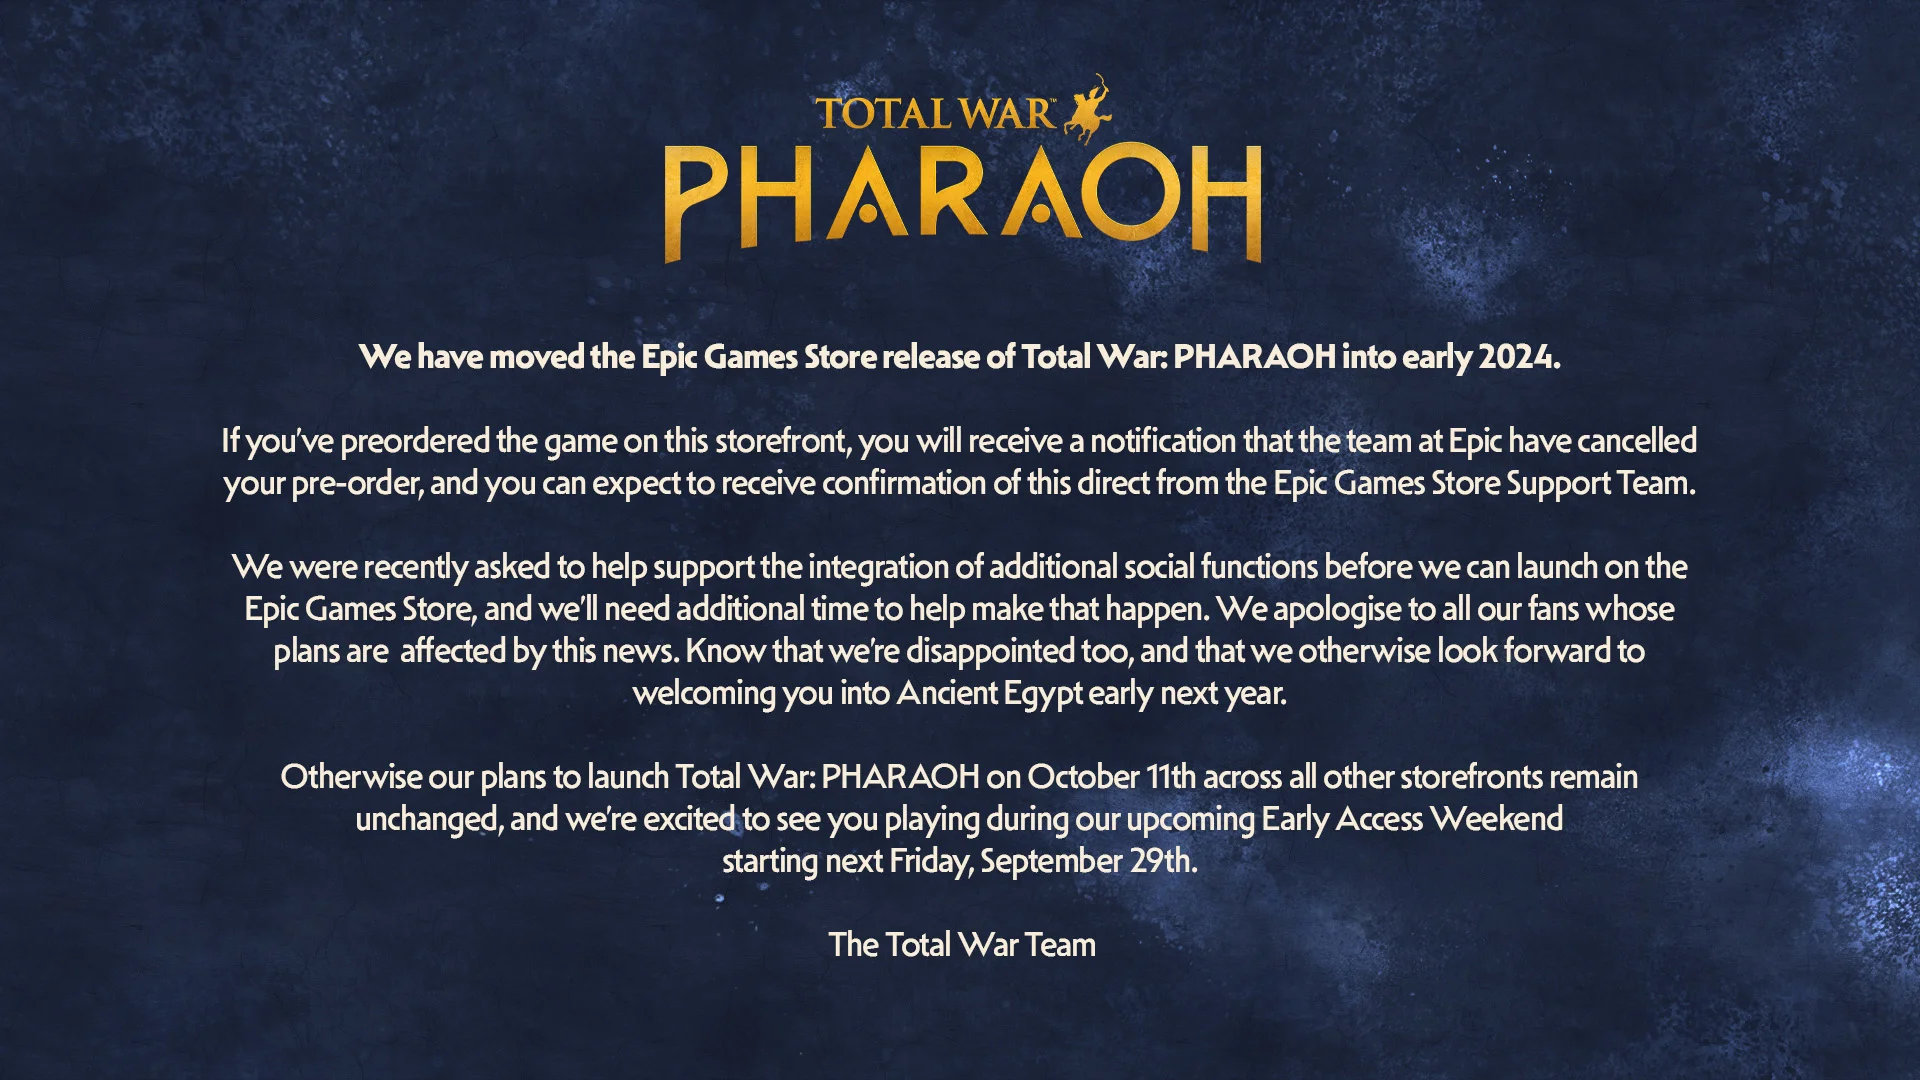 EGS-версию Total War: Pharaoh перенесли на начало 2024 года - фото 1